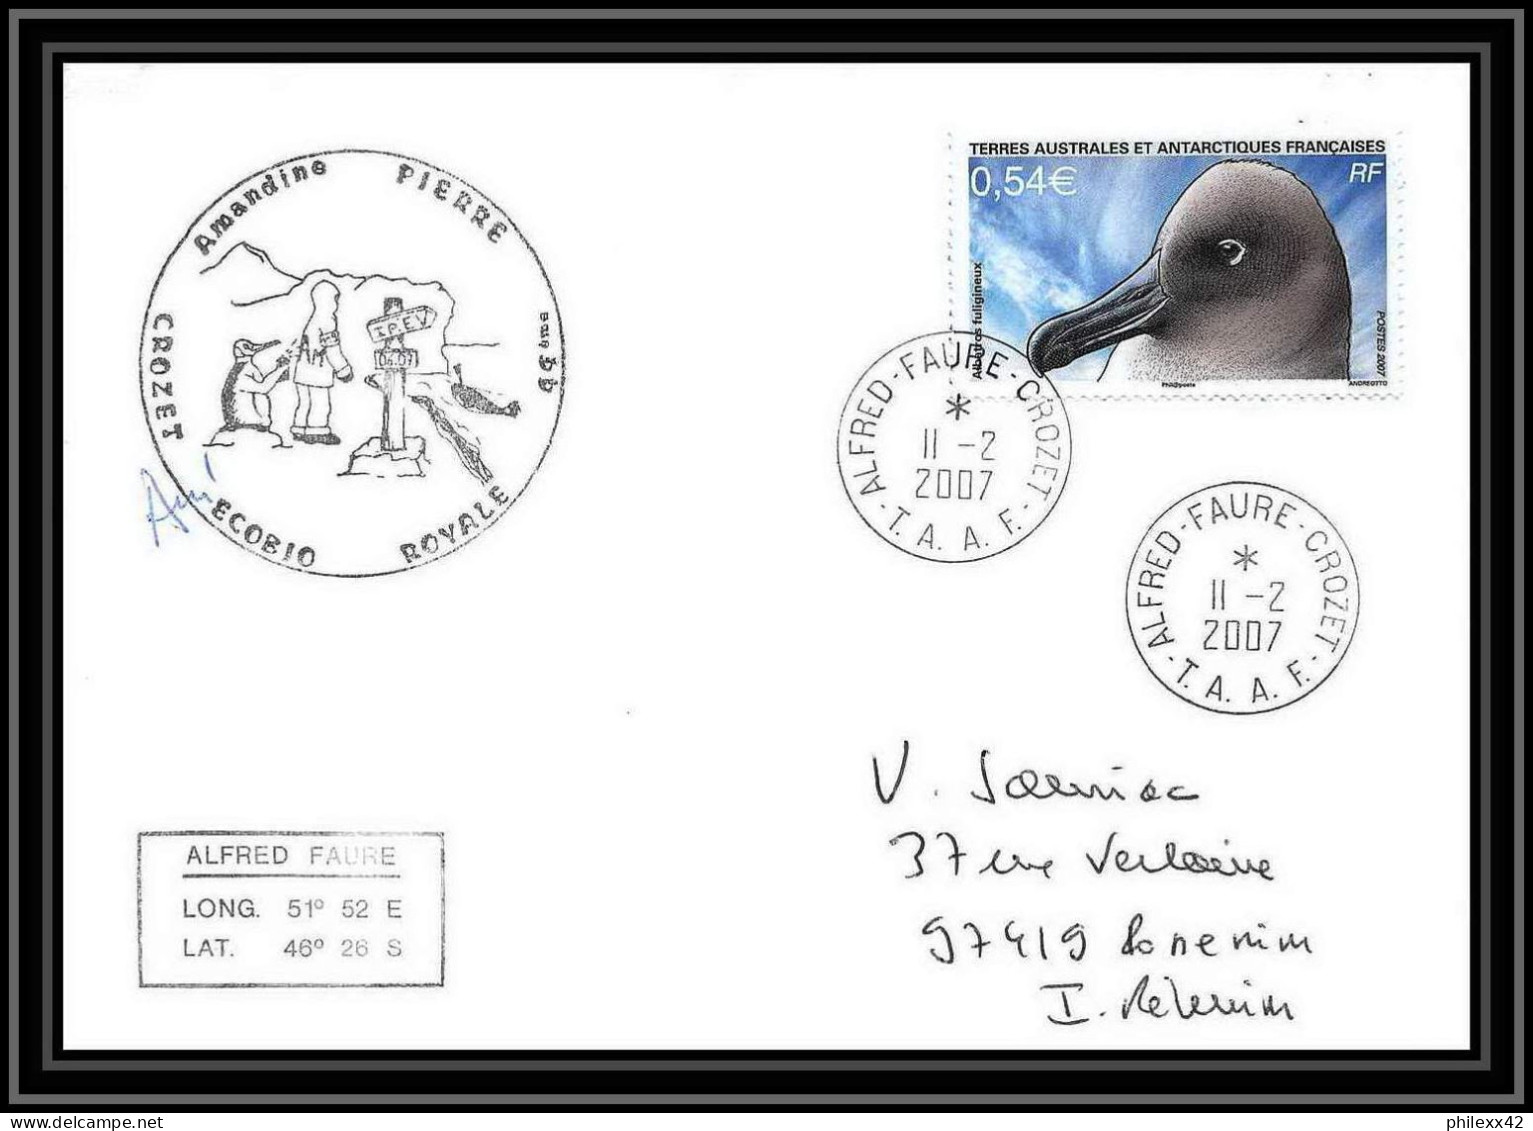 2660 ANTARCTIC TAAF Lettre Cover Dufresne 2 Signé Signed N°468 Crozet Ecobuo Royale 2007 Reunion Oiseaux (birds) - Expediciones Antárticas